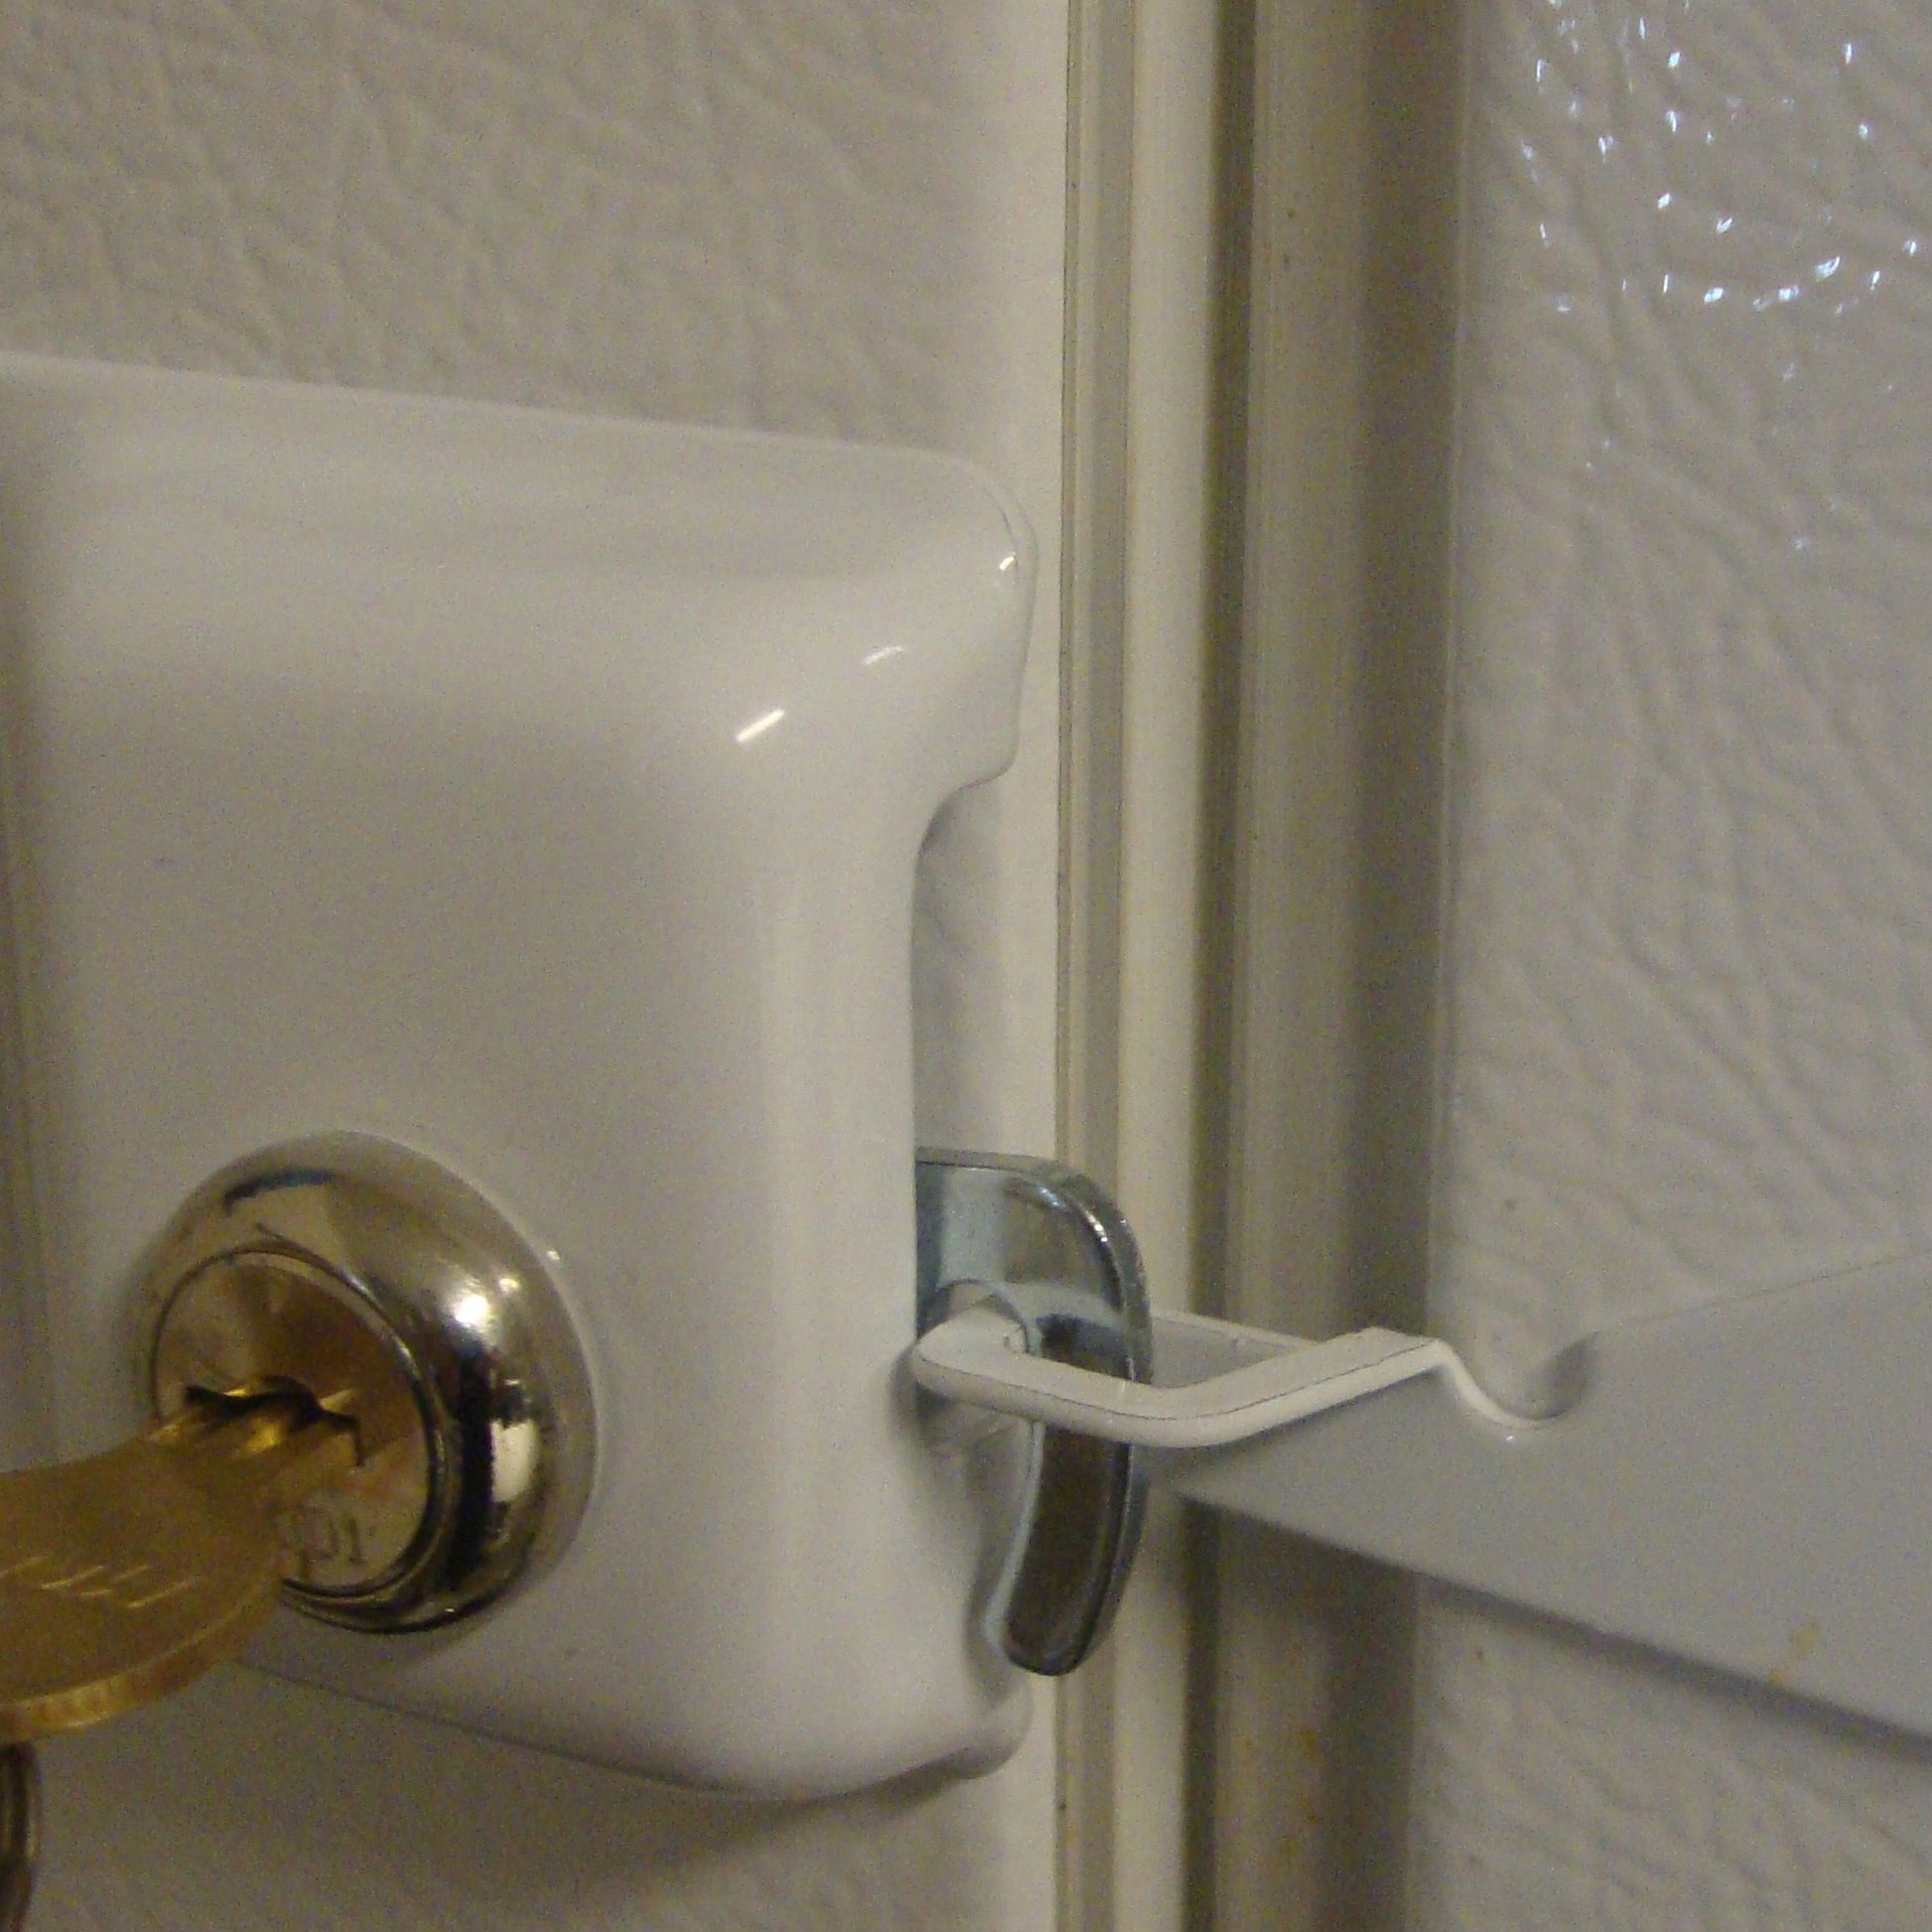 Refrigerator Door Lock – Aware Service Home & Office Service Provider